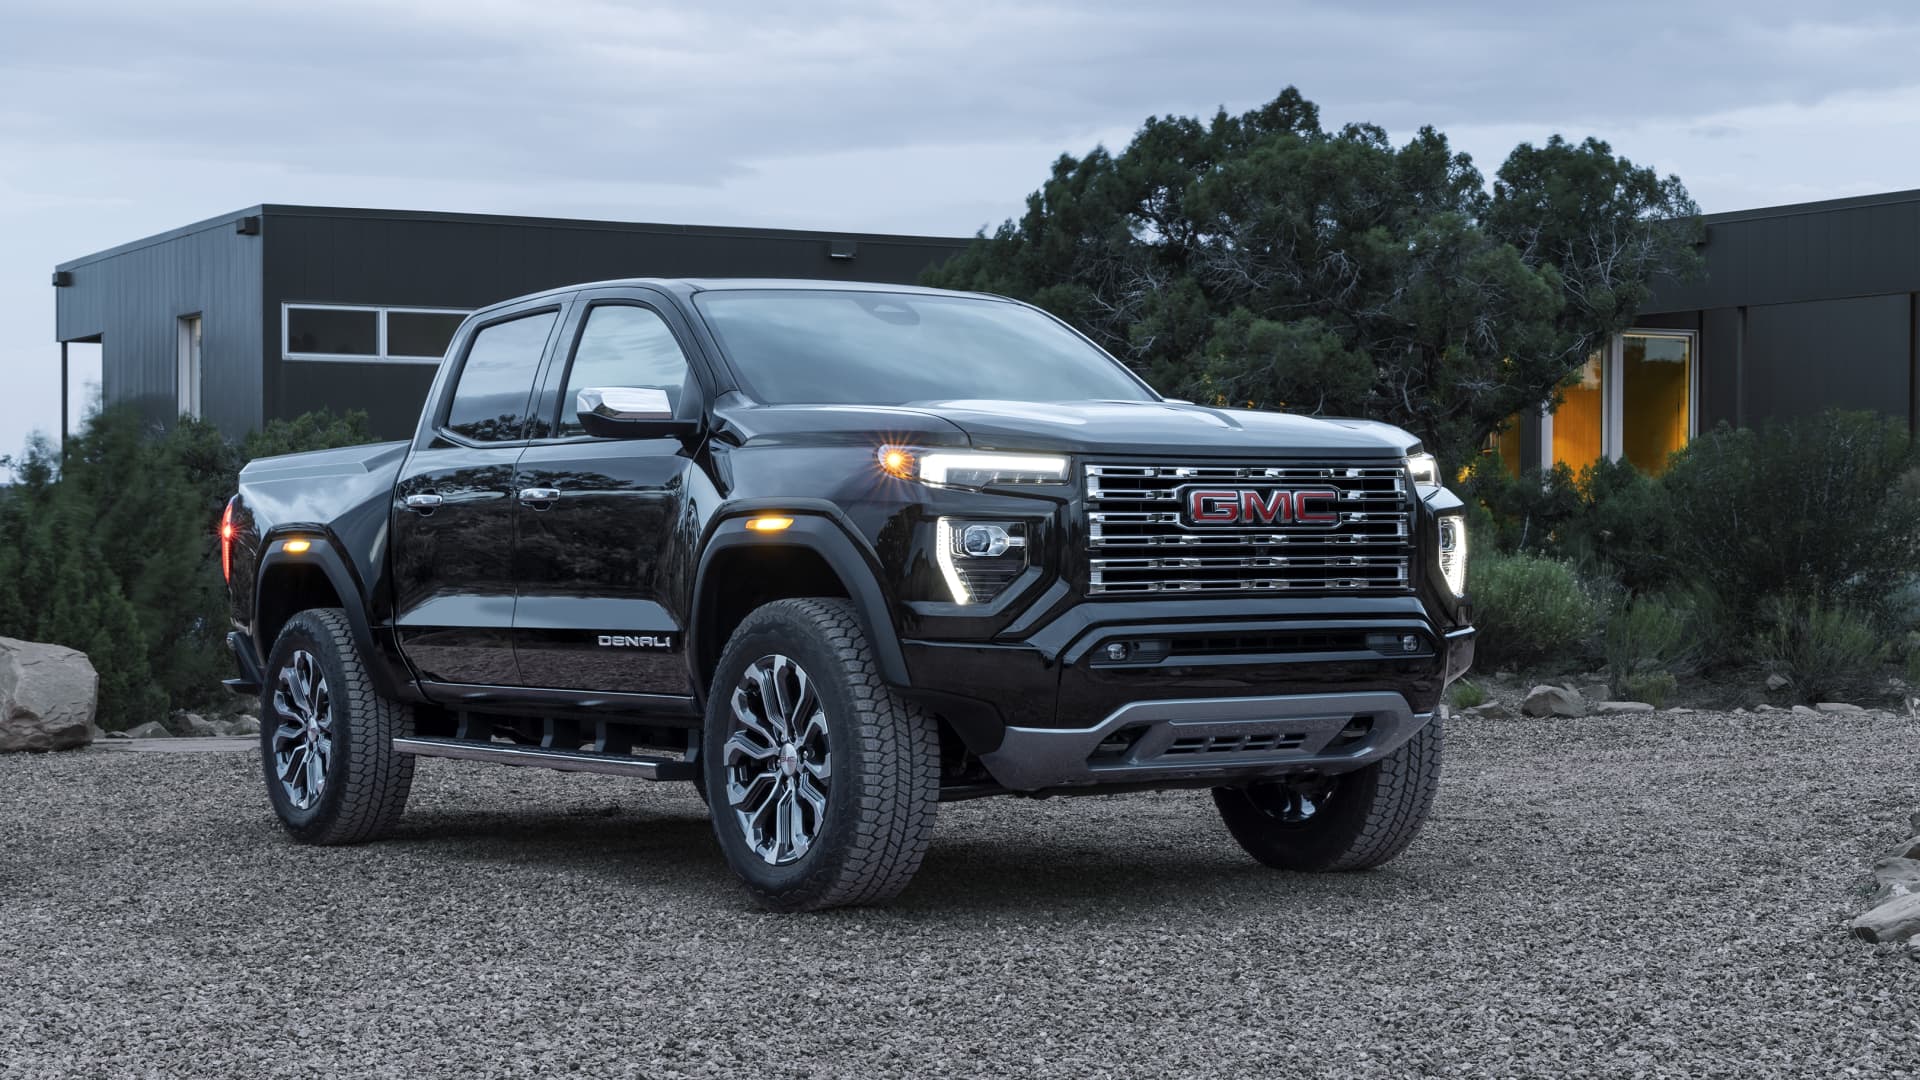 GM reveals new GMC Canyon premium midsize pickup, starting at $40,000